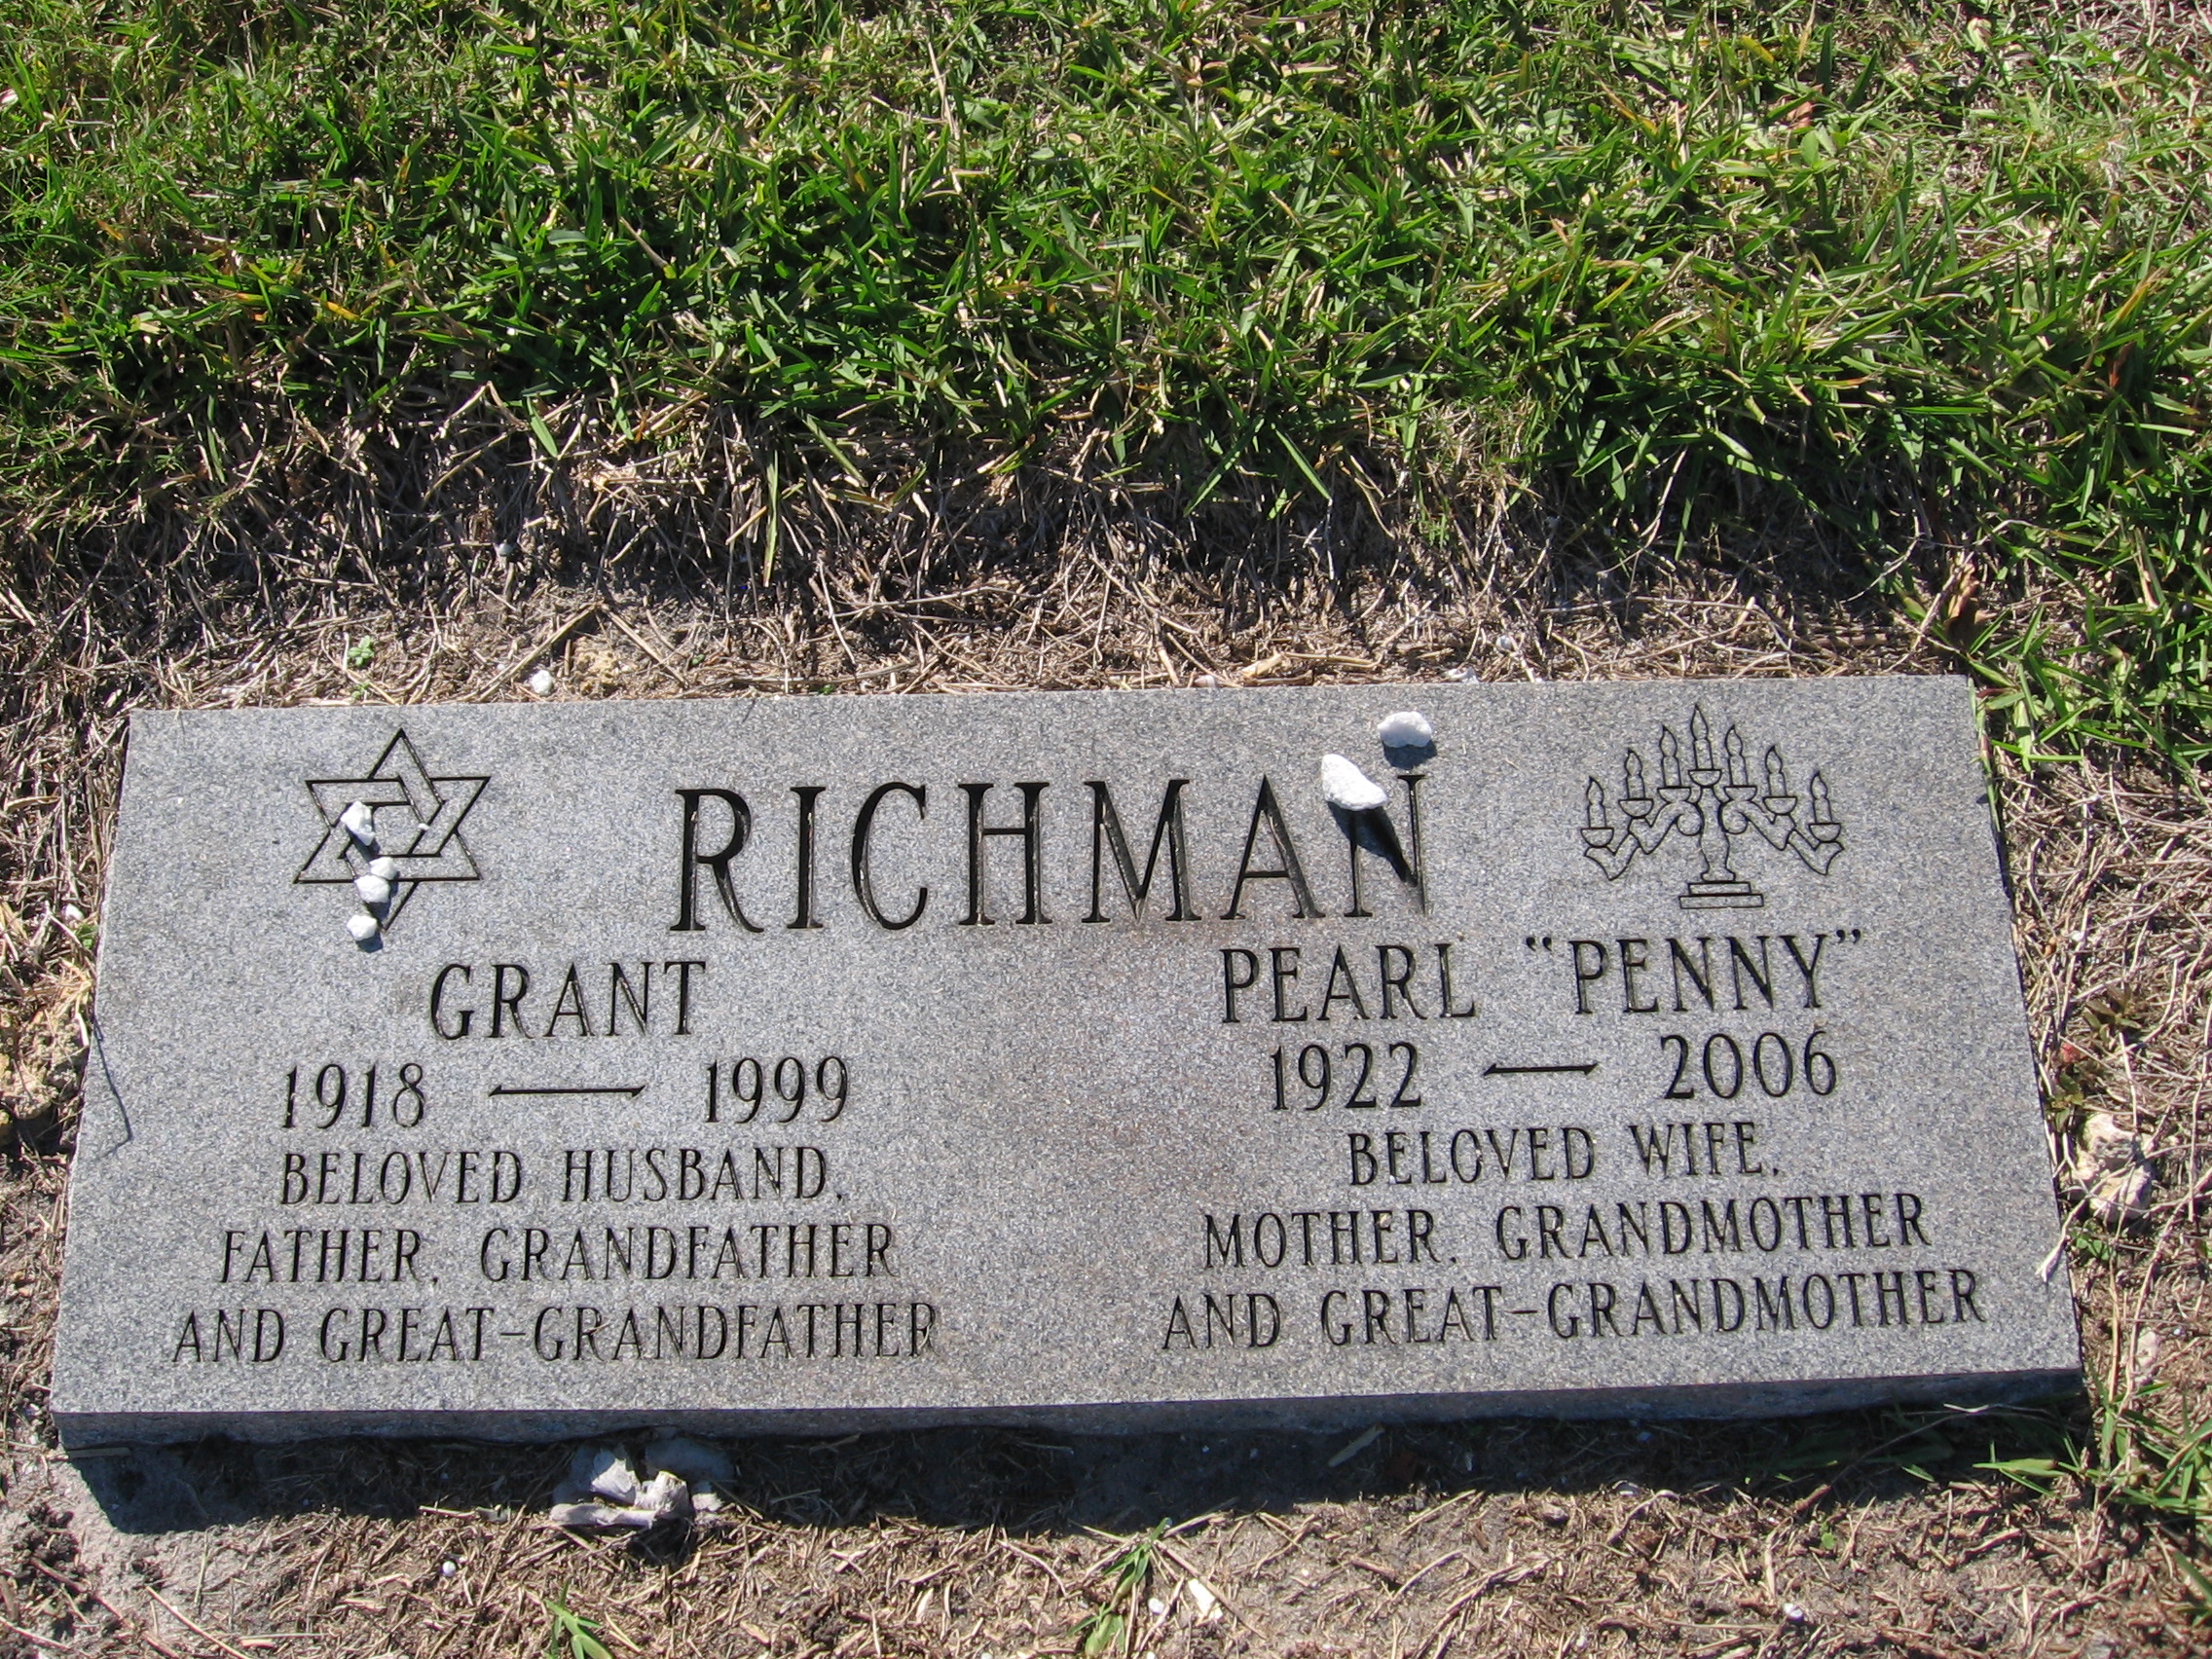 Grant Richman